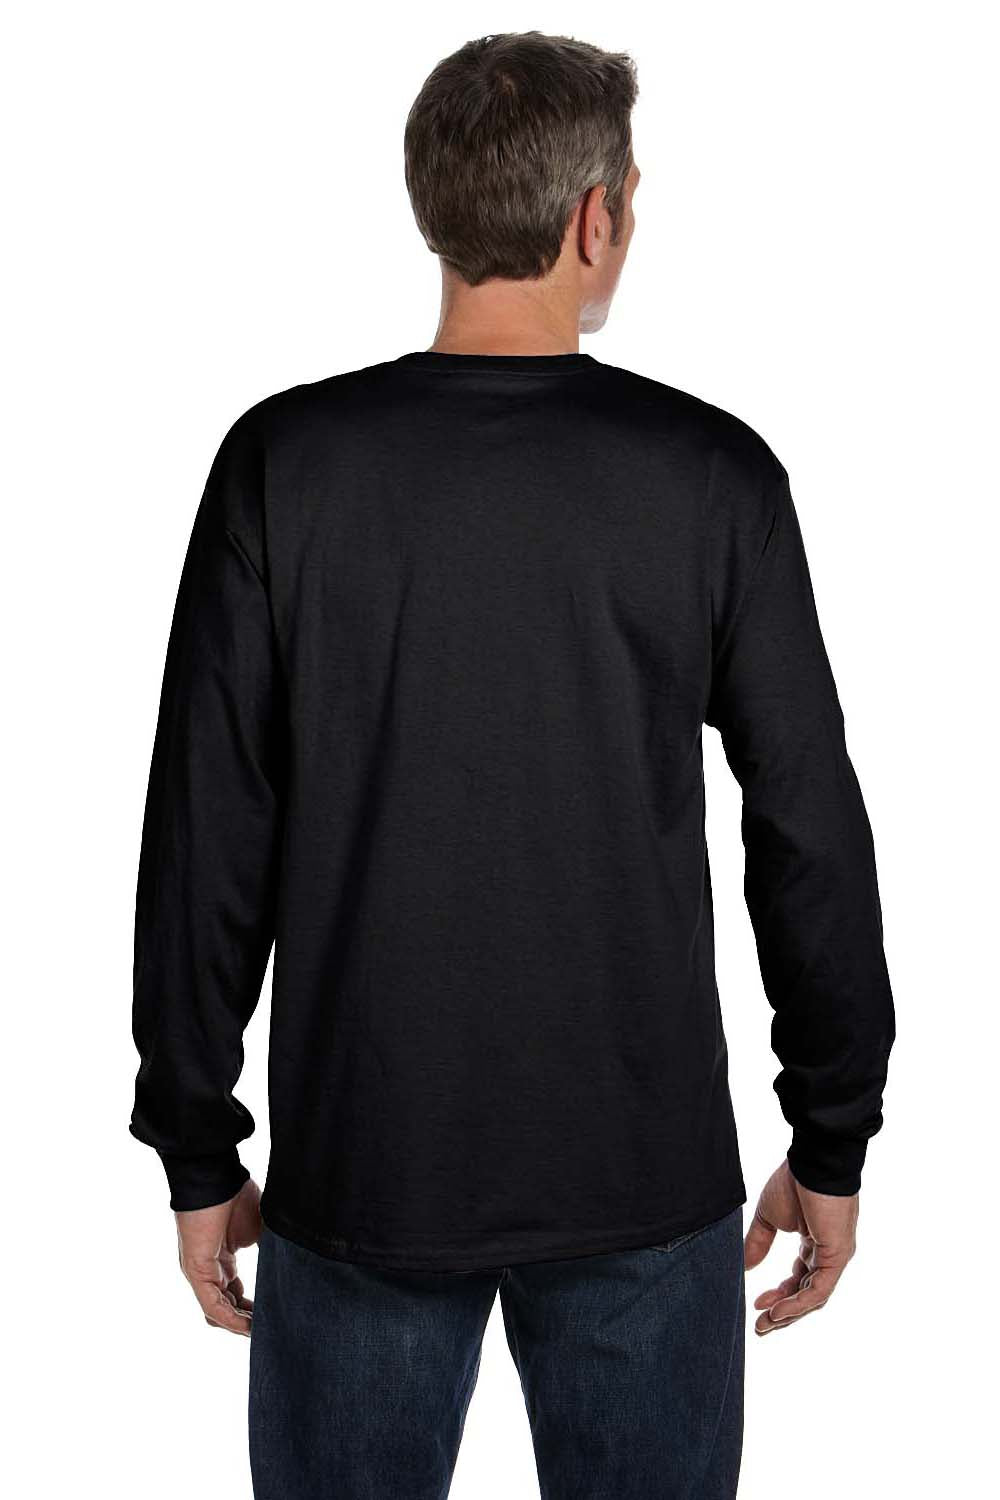 Hanes 5596 Mens ComfortSoft Long Sleeve Crewneck T-Shirt w/ Pocket Black Back